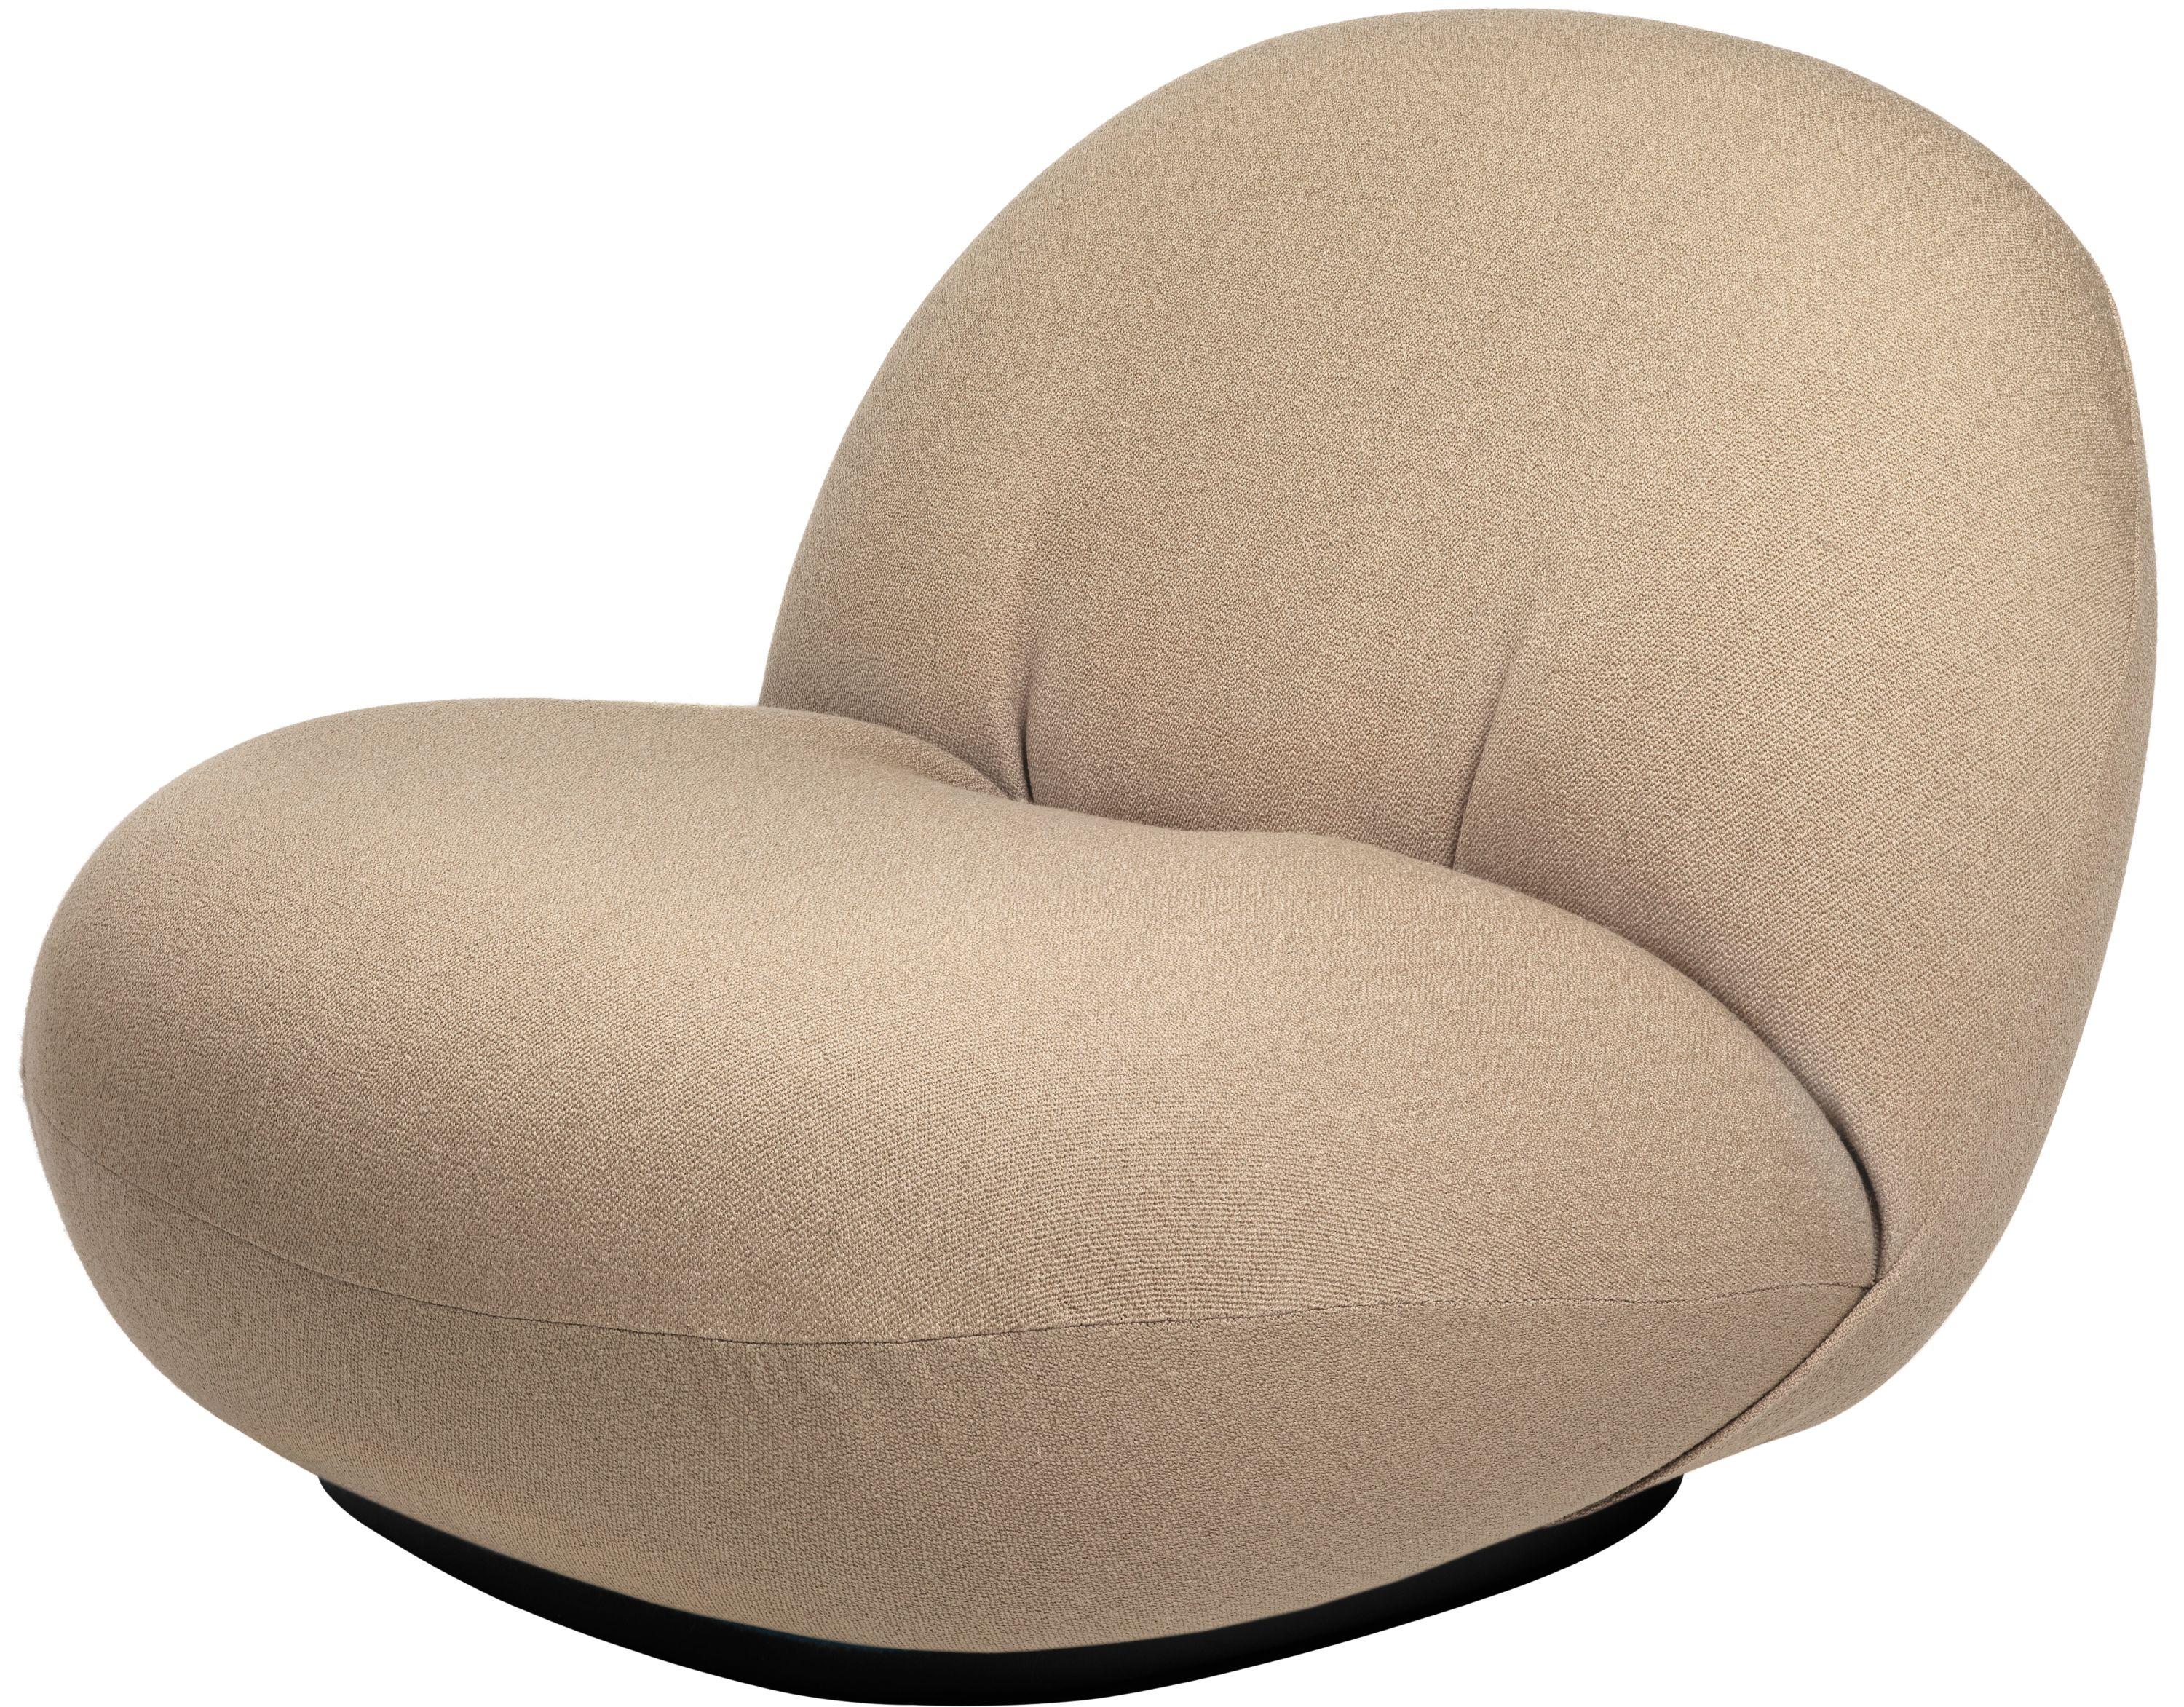 Pierre Paulin Pacha Lounge Chair Upholstered in Vidar Kvadrat Boucle '0222' For Sale 6